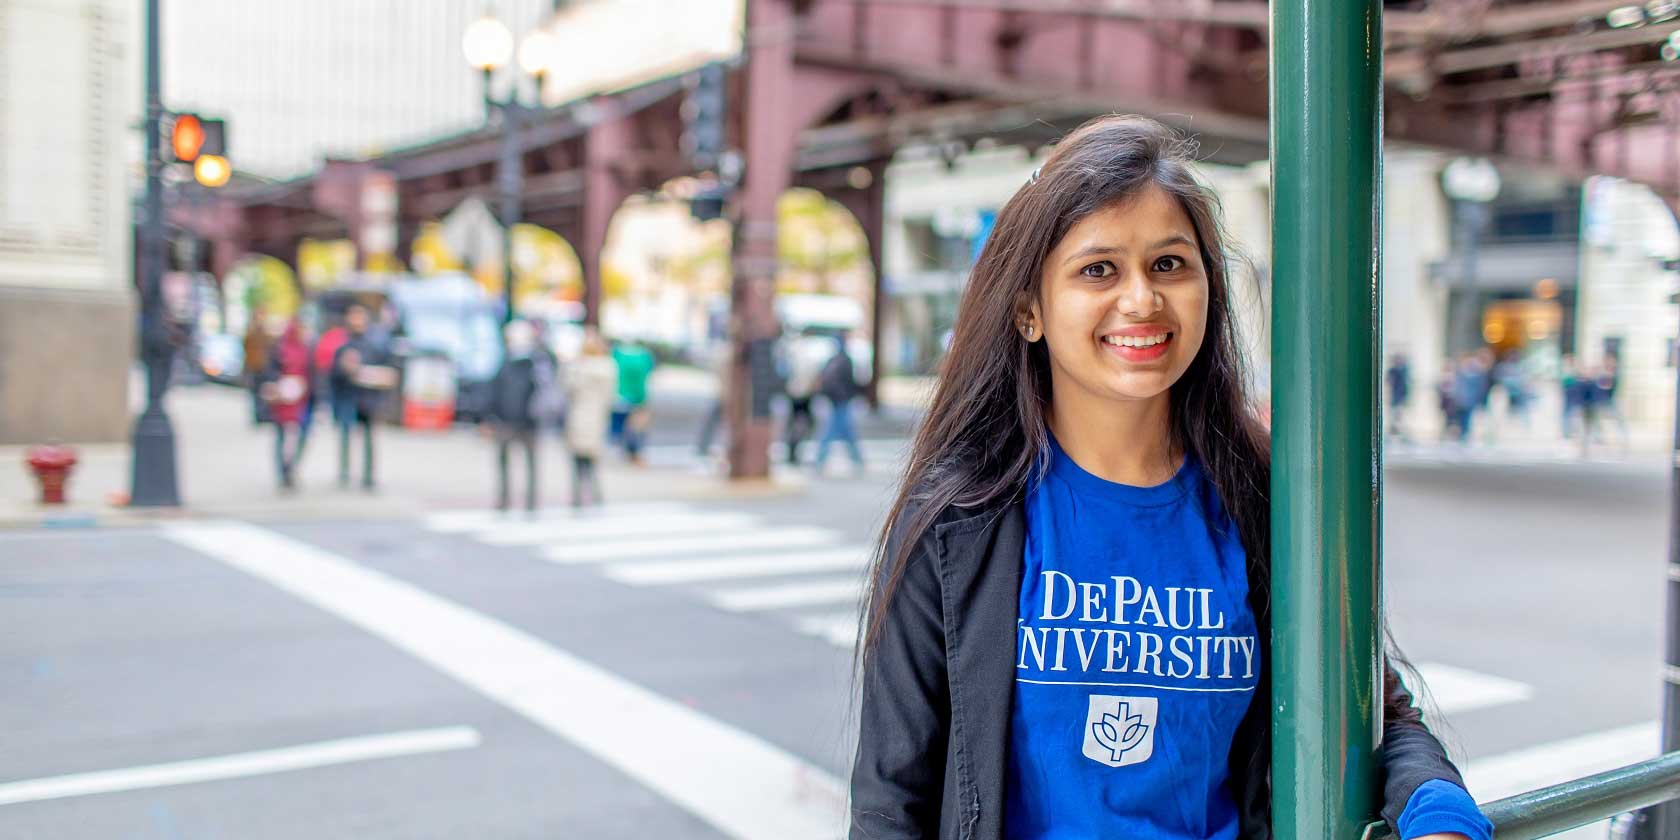 A smiling young woman with long dark hair wearing a DePaul t-shirt.
